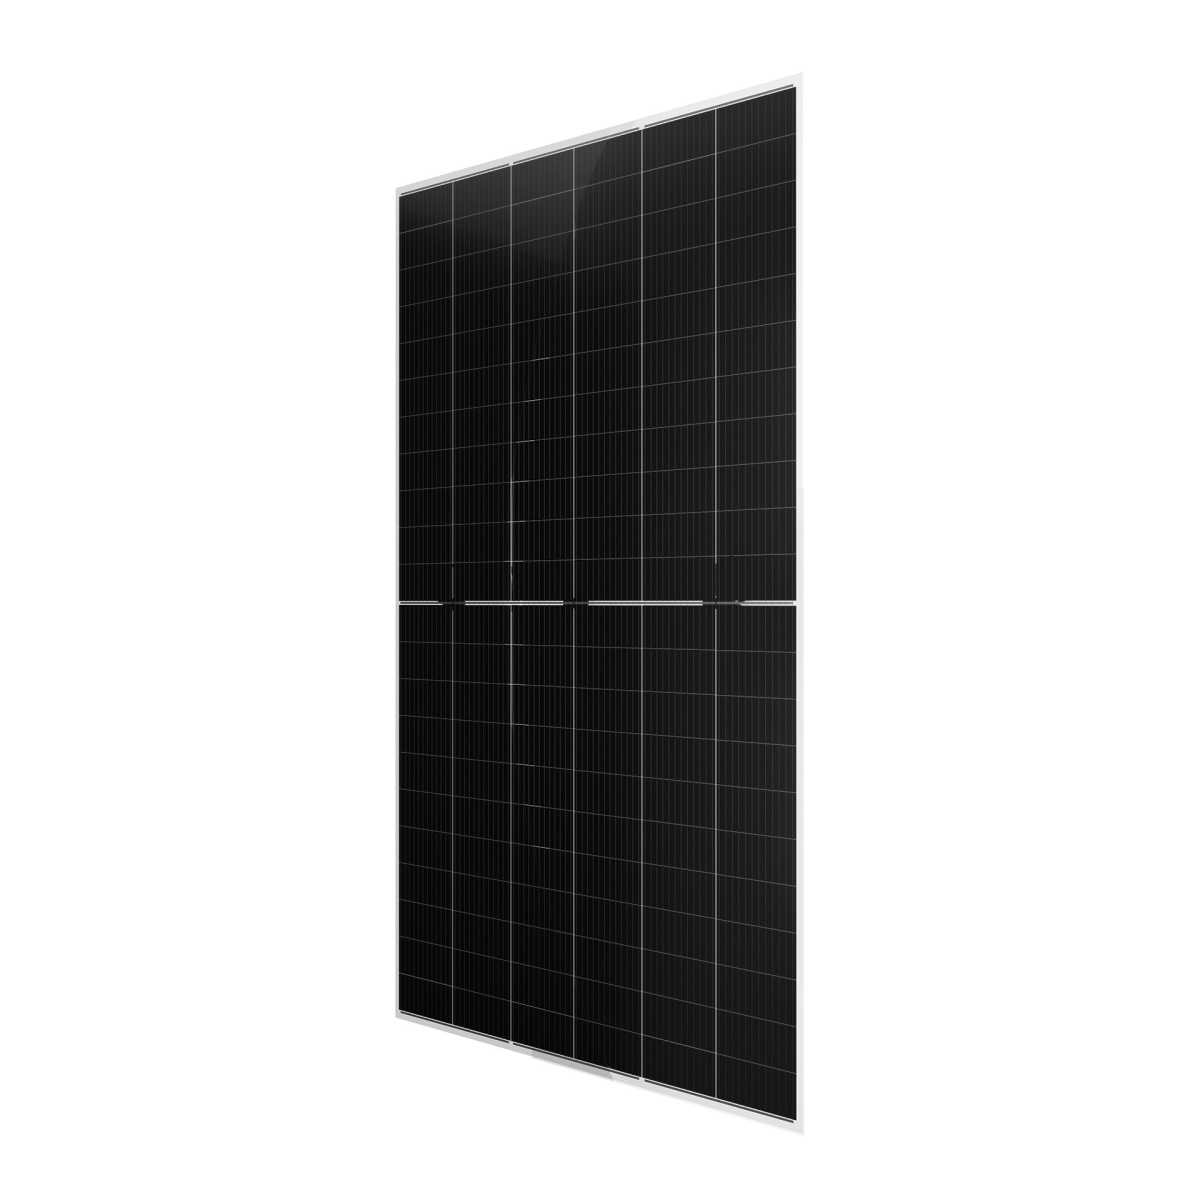 Tommatech 650Wp M12 132PM Cells Bifacial G2G Half-Cut MB Solar Panel